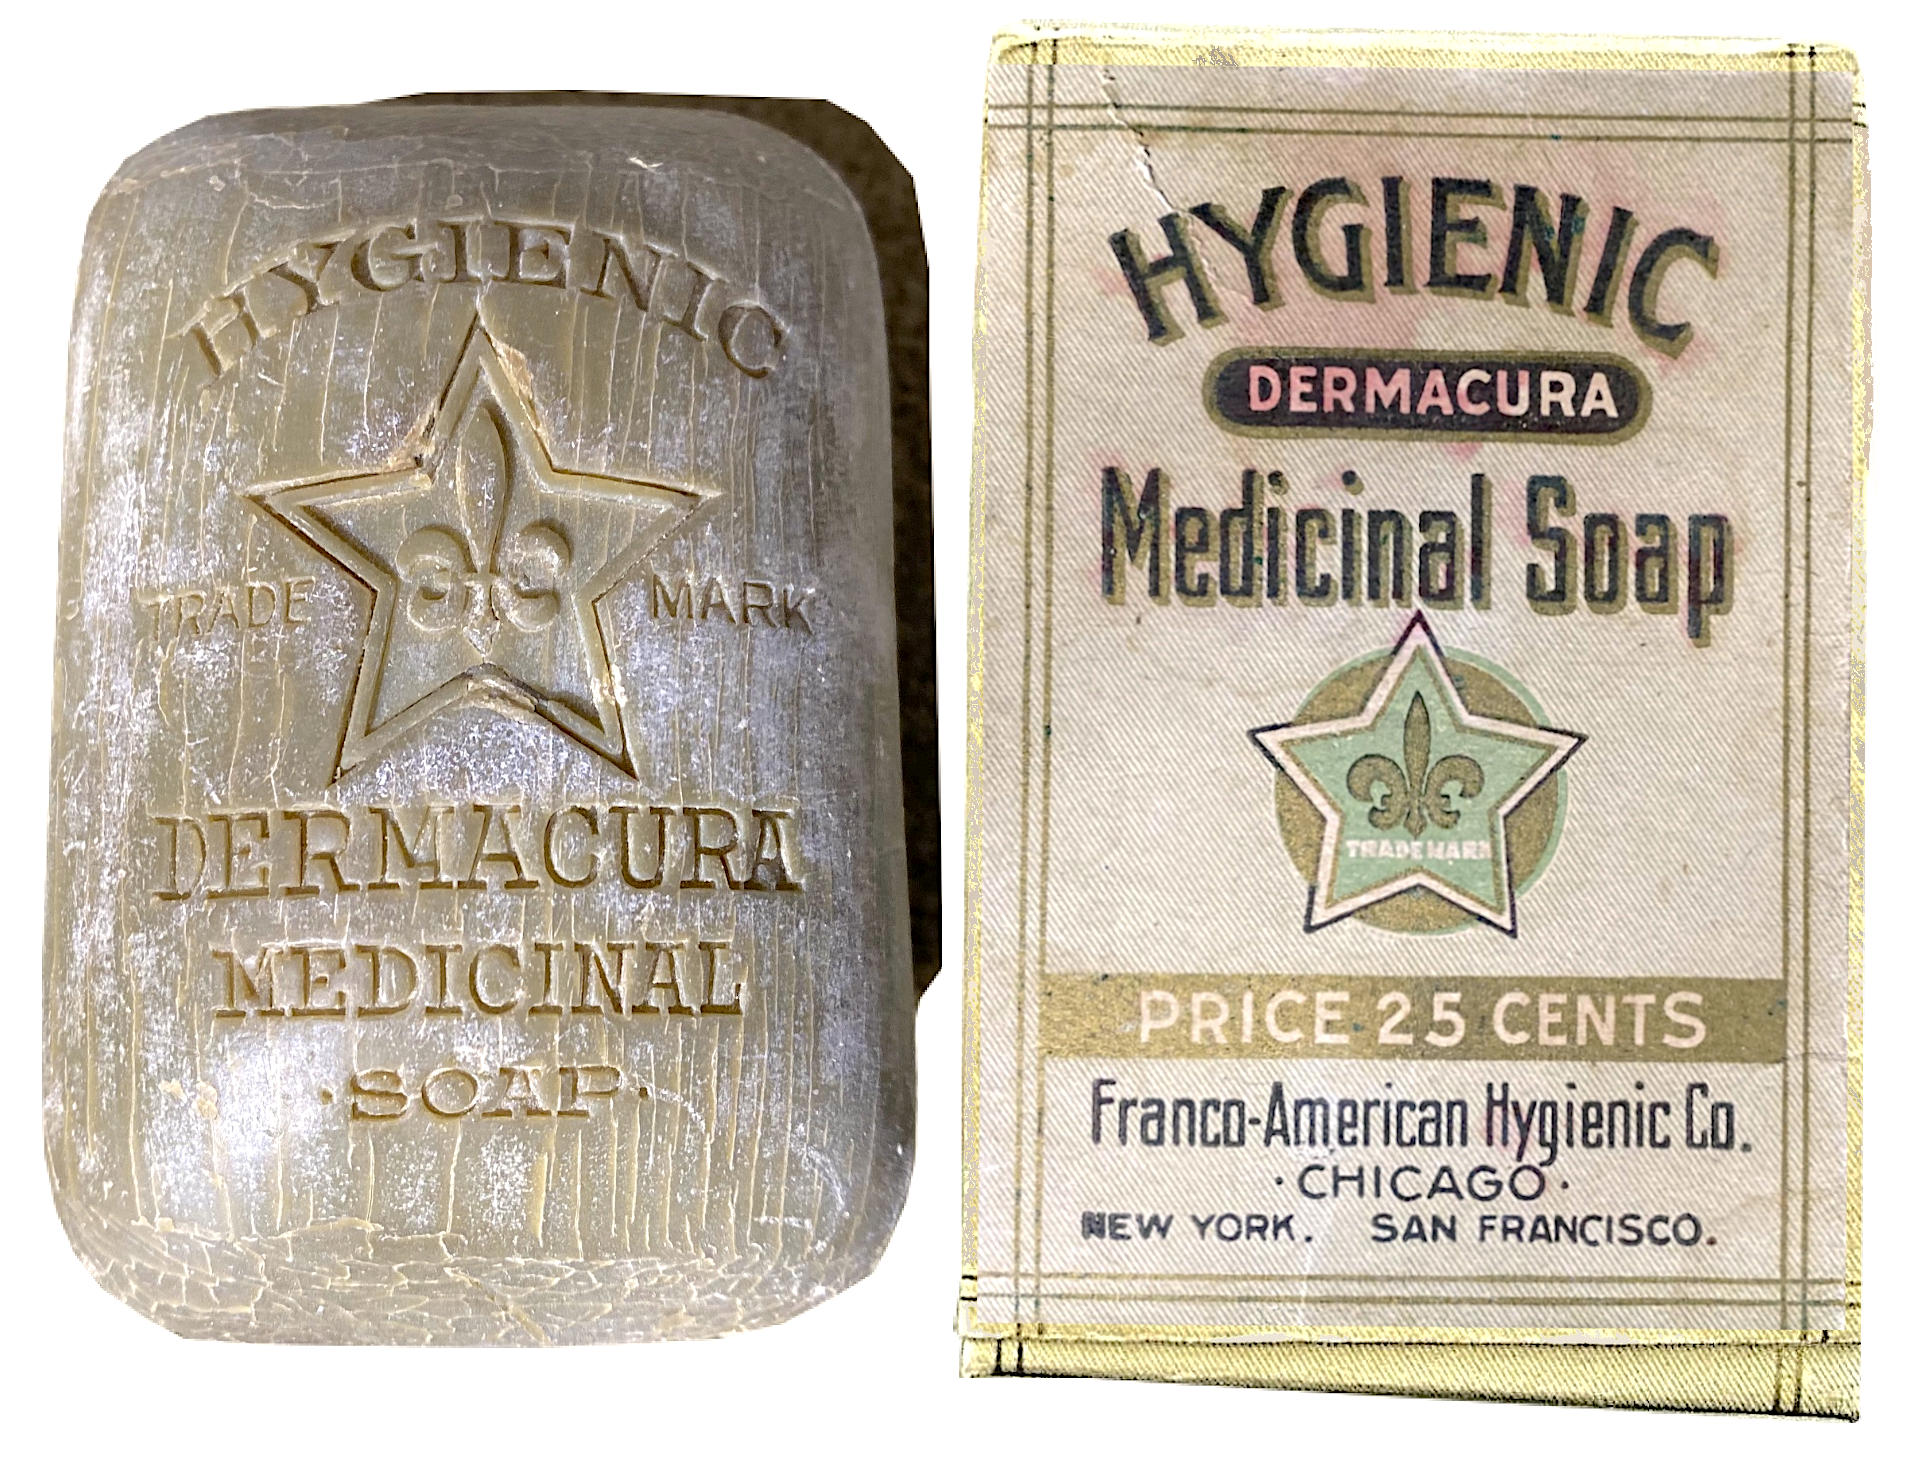 Franco-American Hygienic Co., est. 1889